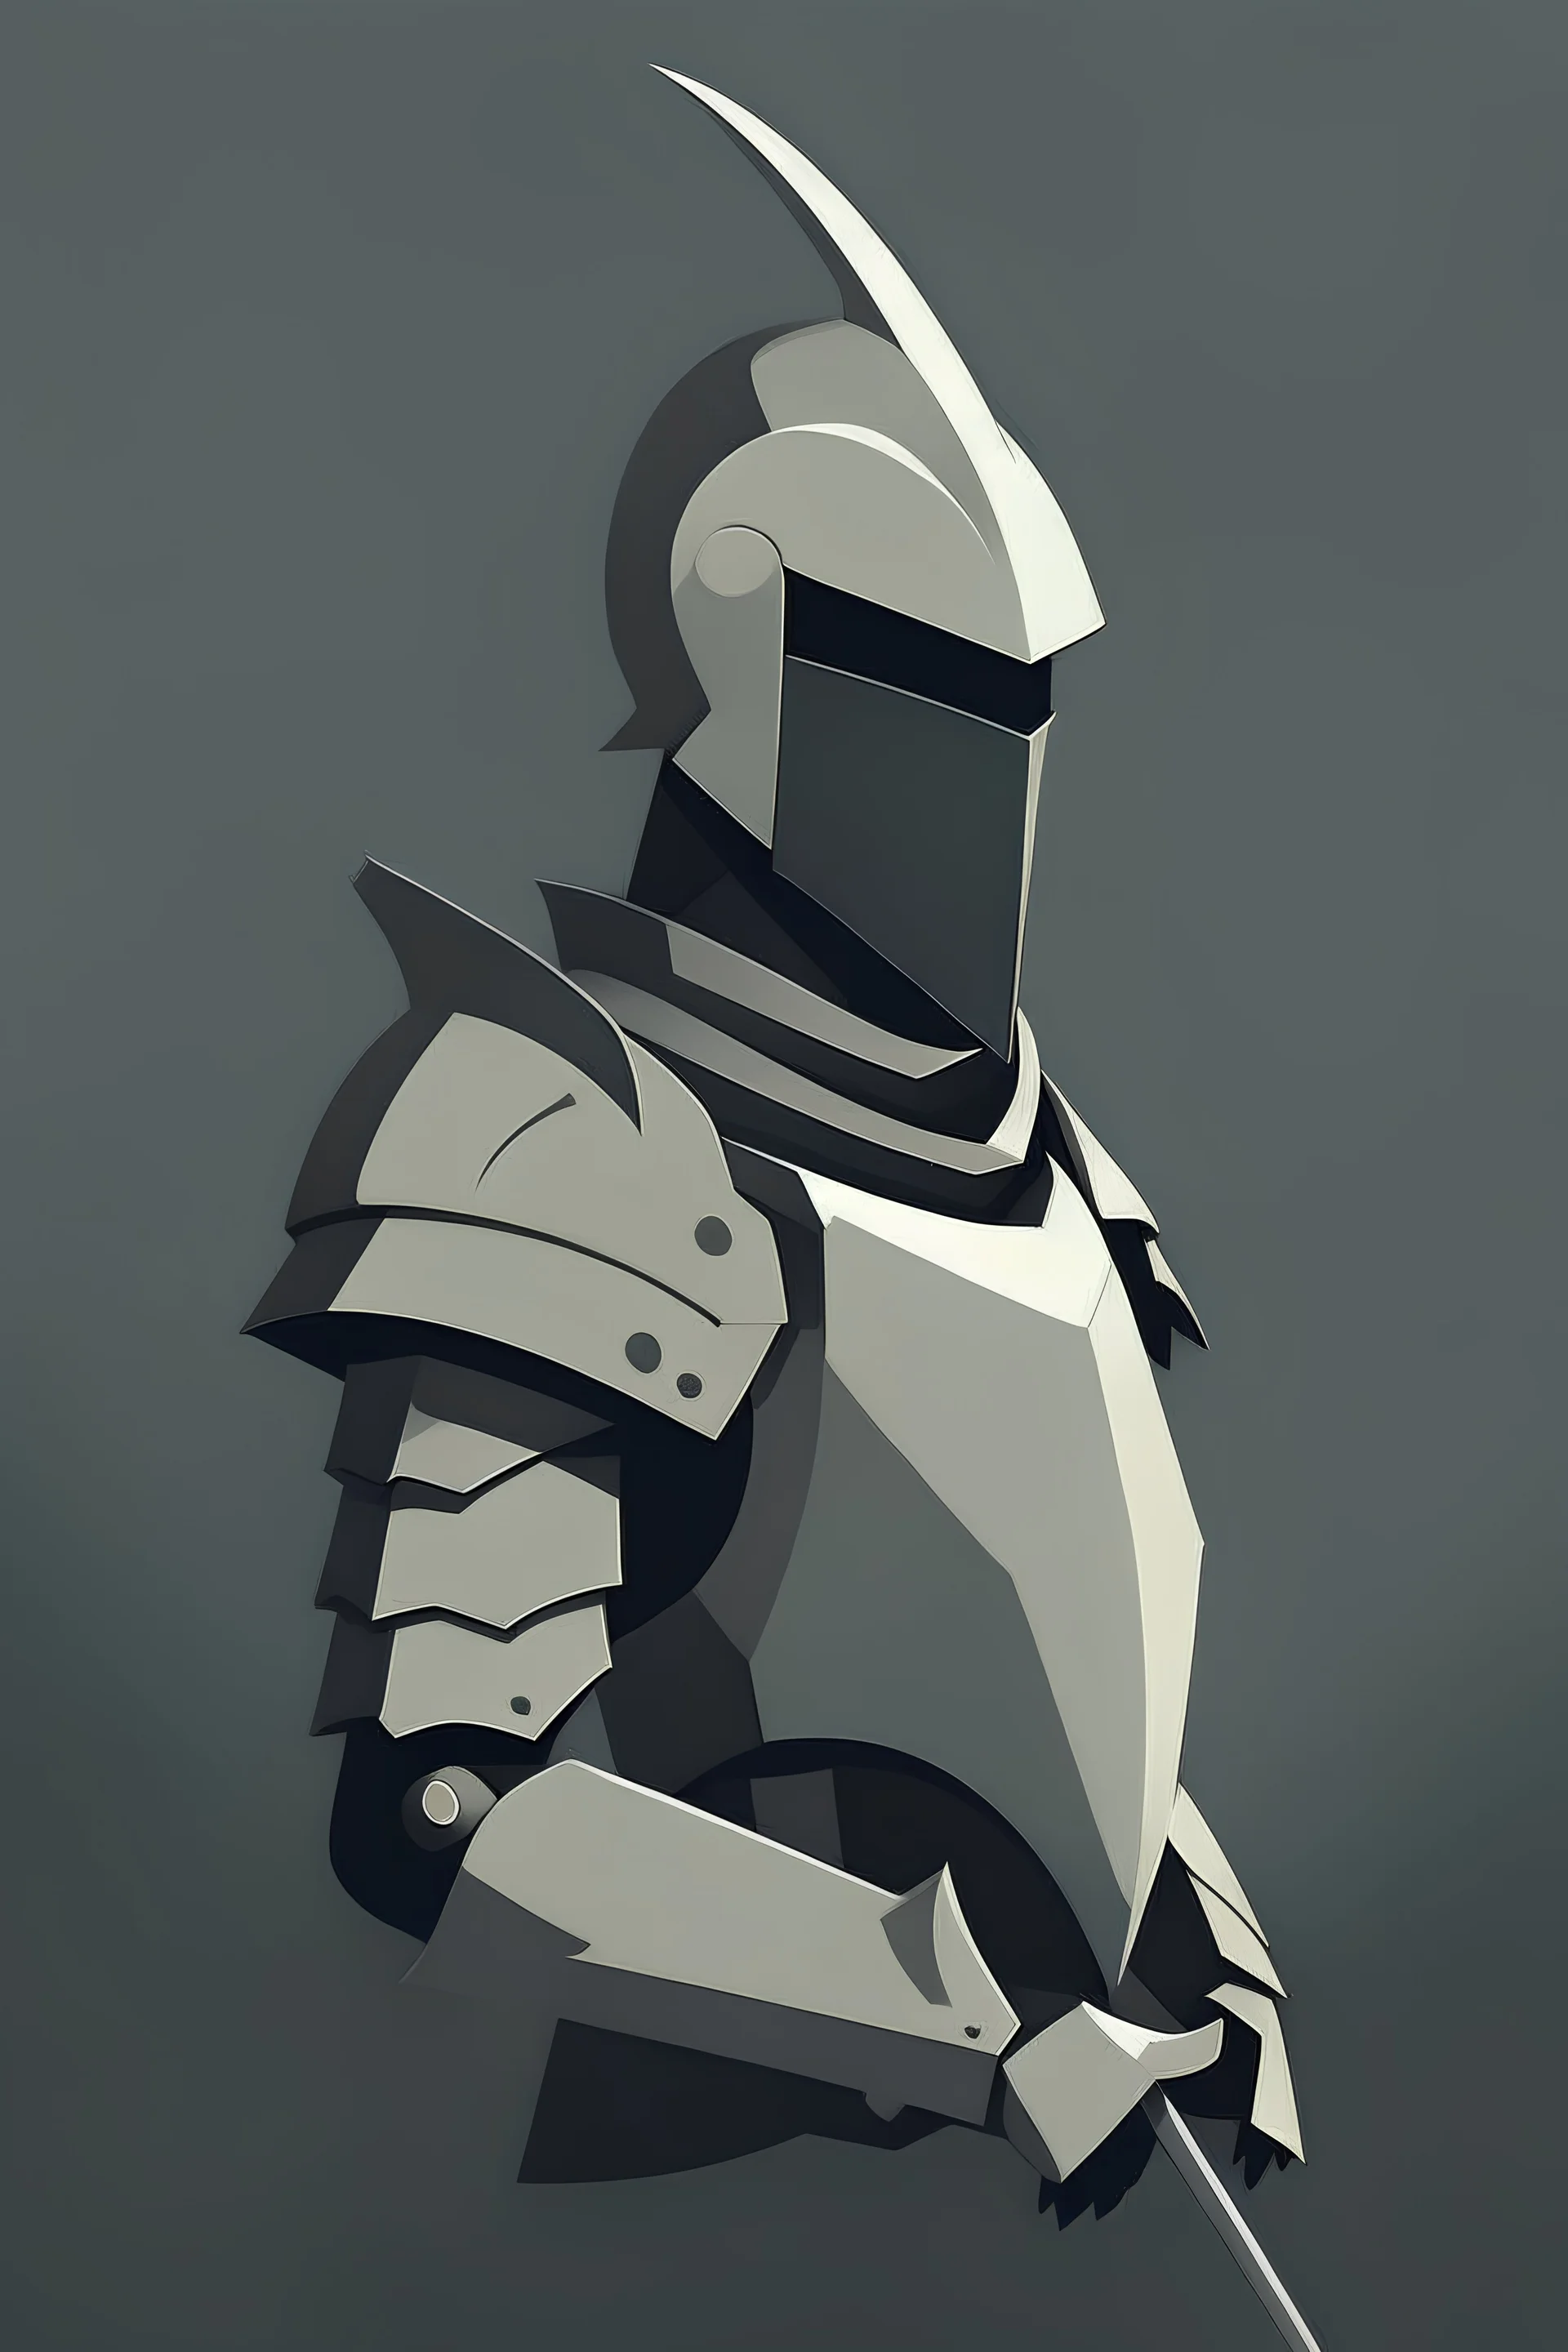 Minimalistic concept art of knight